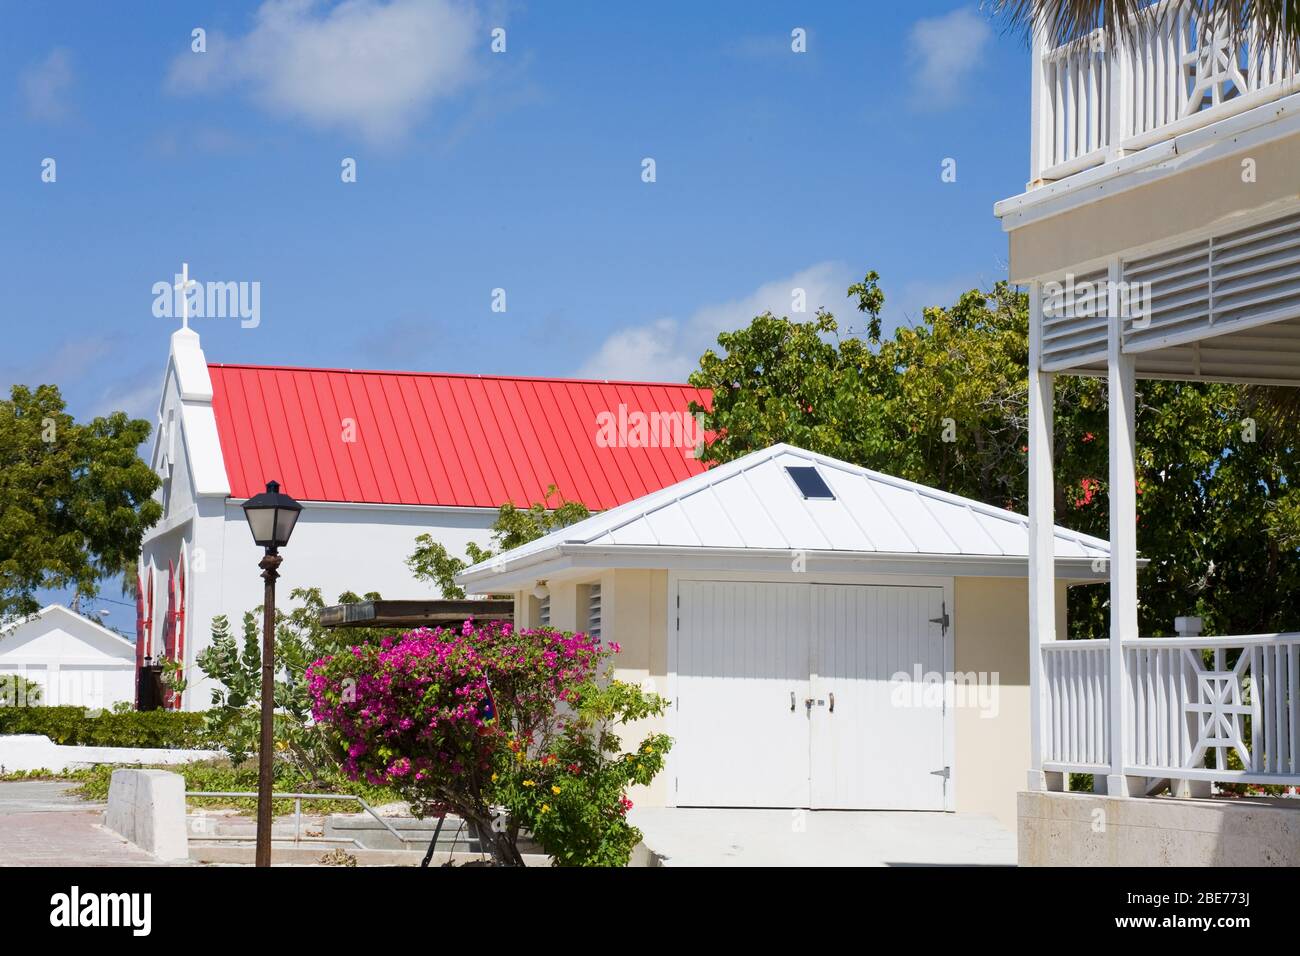 Église anglicane St. Mary's, Cockburn Town, Grand Turk Island, îles Turques et Caïques, Caraïbes Banque D'Images